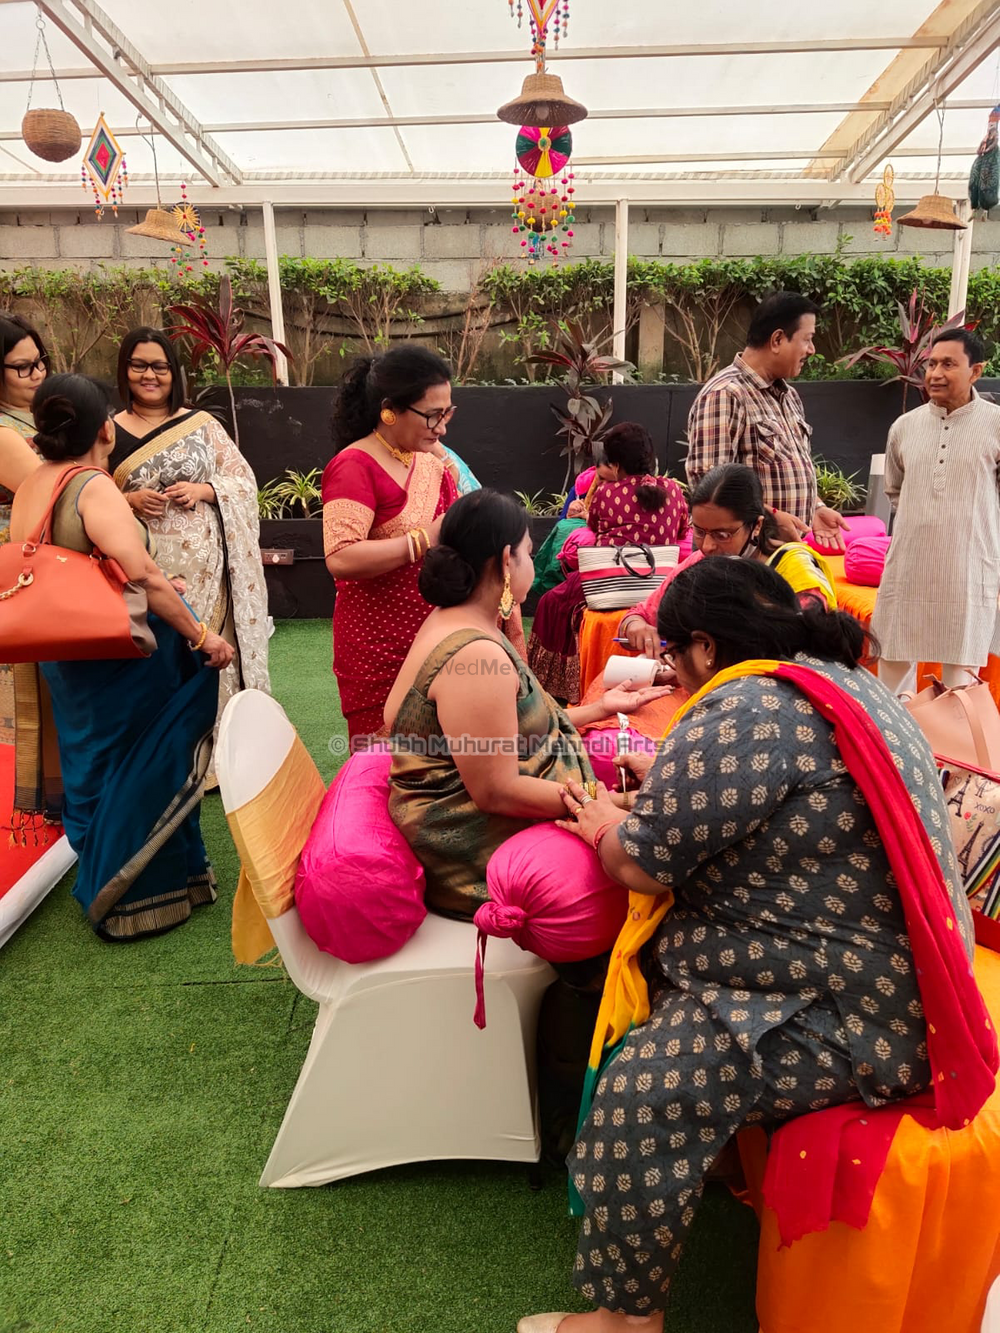 Photo From Bride Anushmita's Wedding Mehndi Event. - By Shubh Muhurat Mehendi Arts